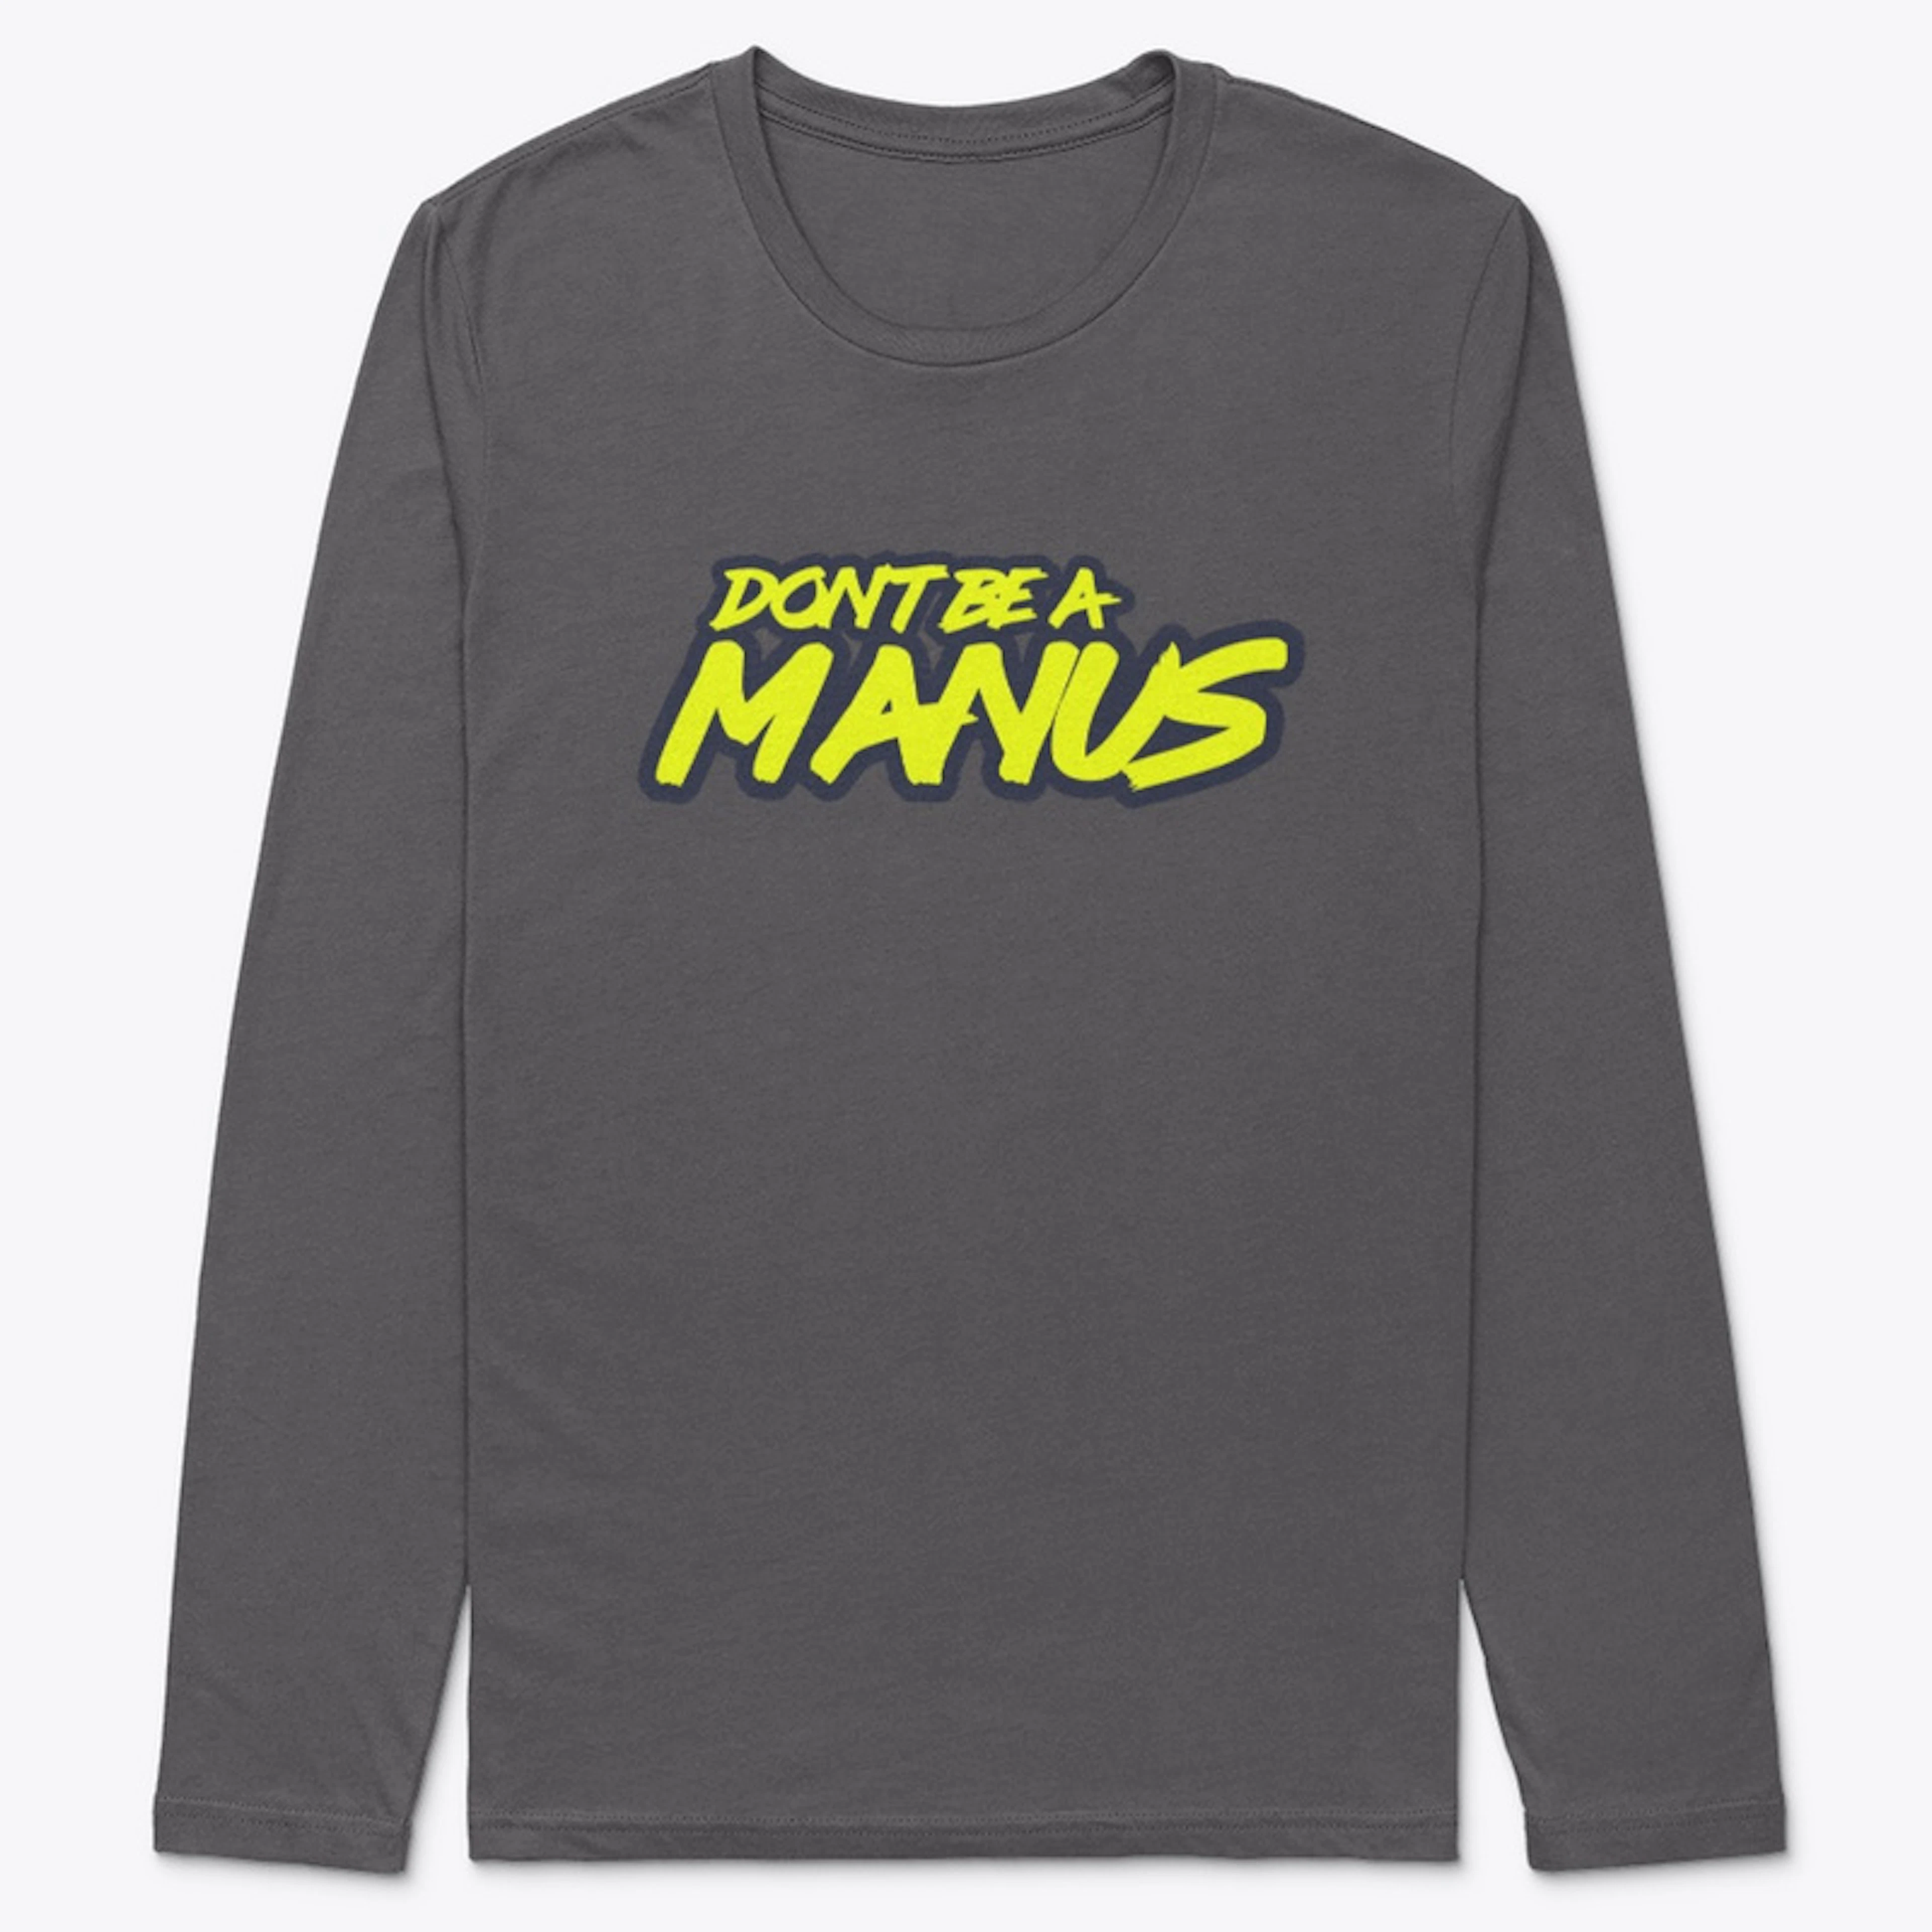 Don't Be A Manus long sleeve shirt